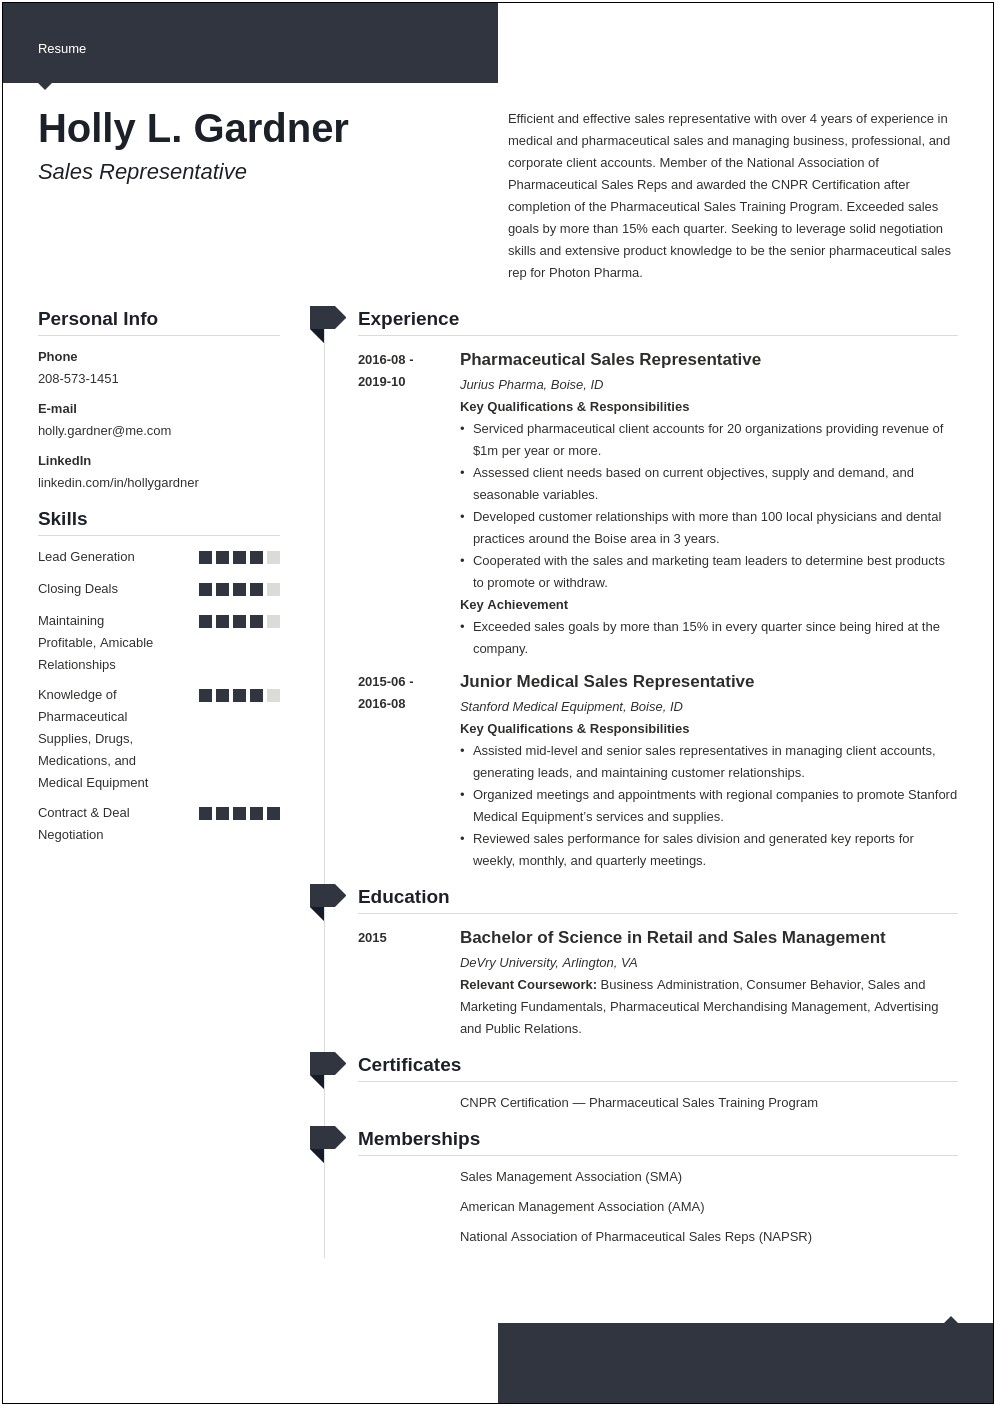 Sales Person Job Description Resume